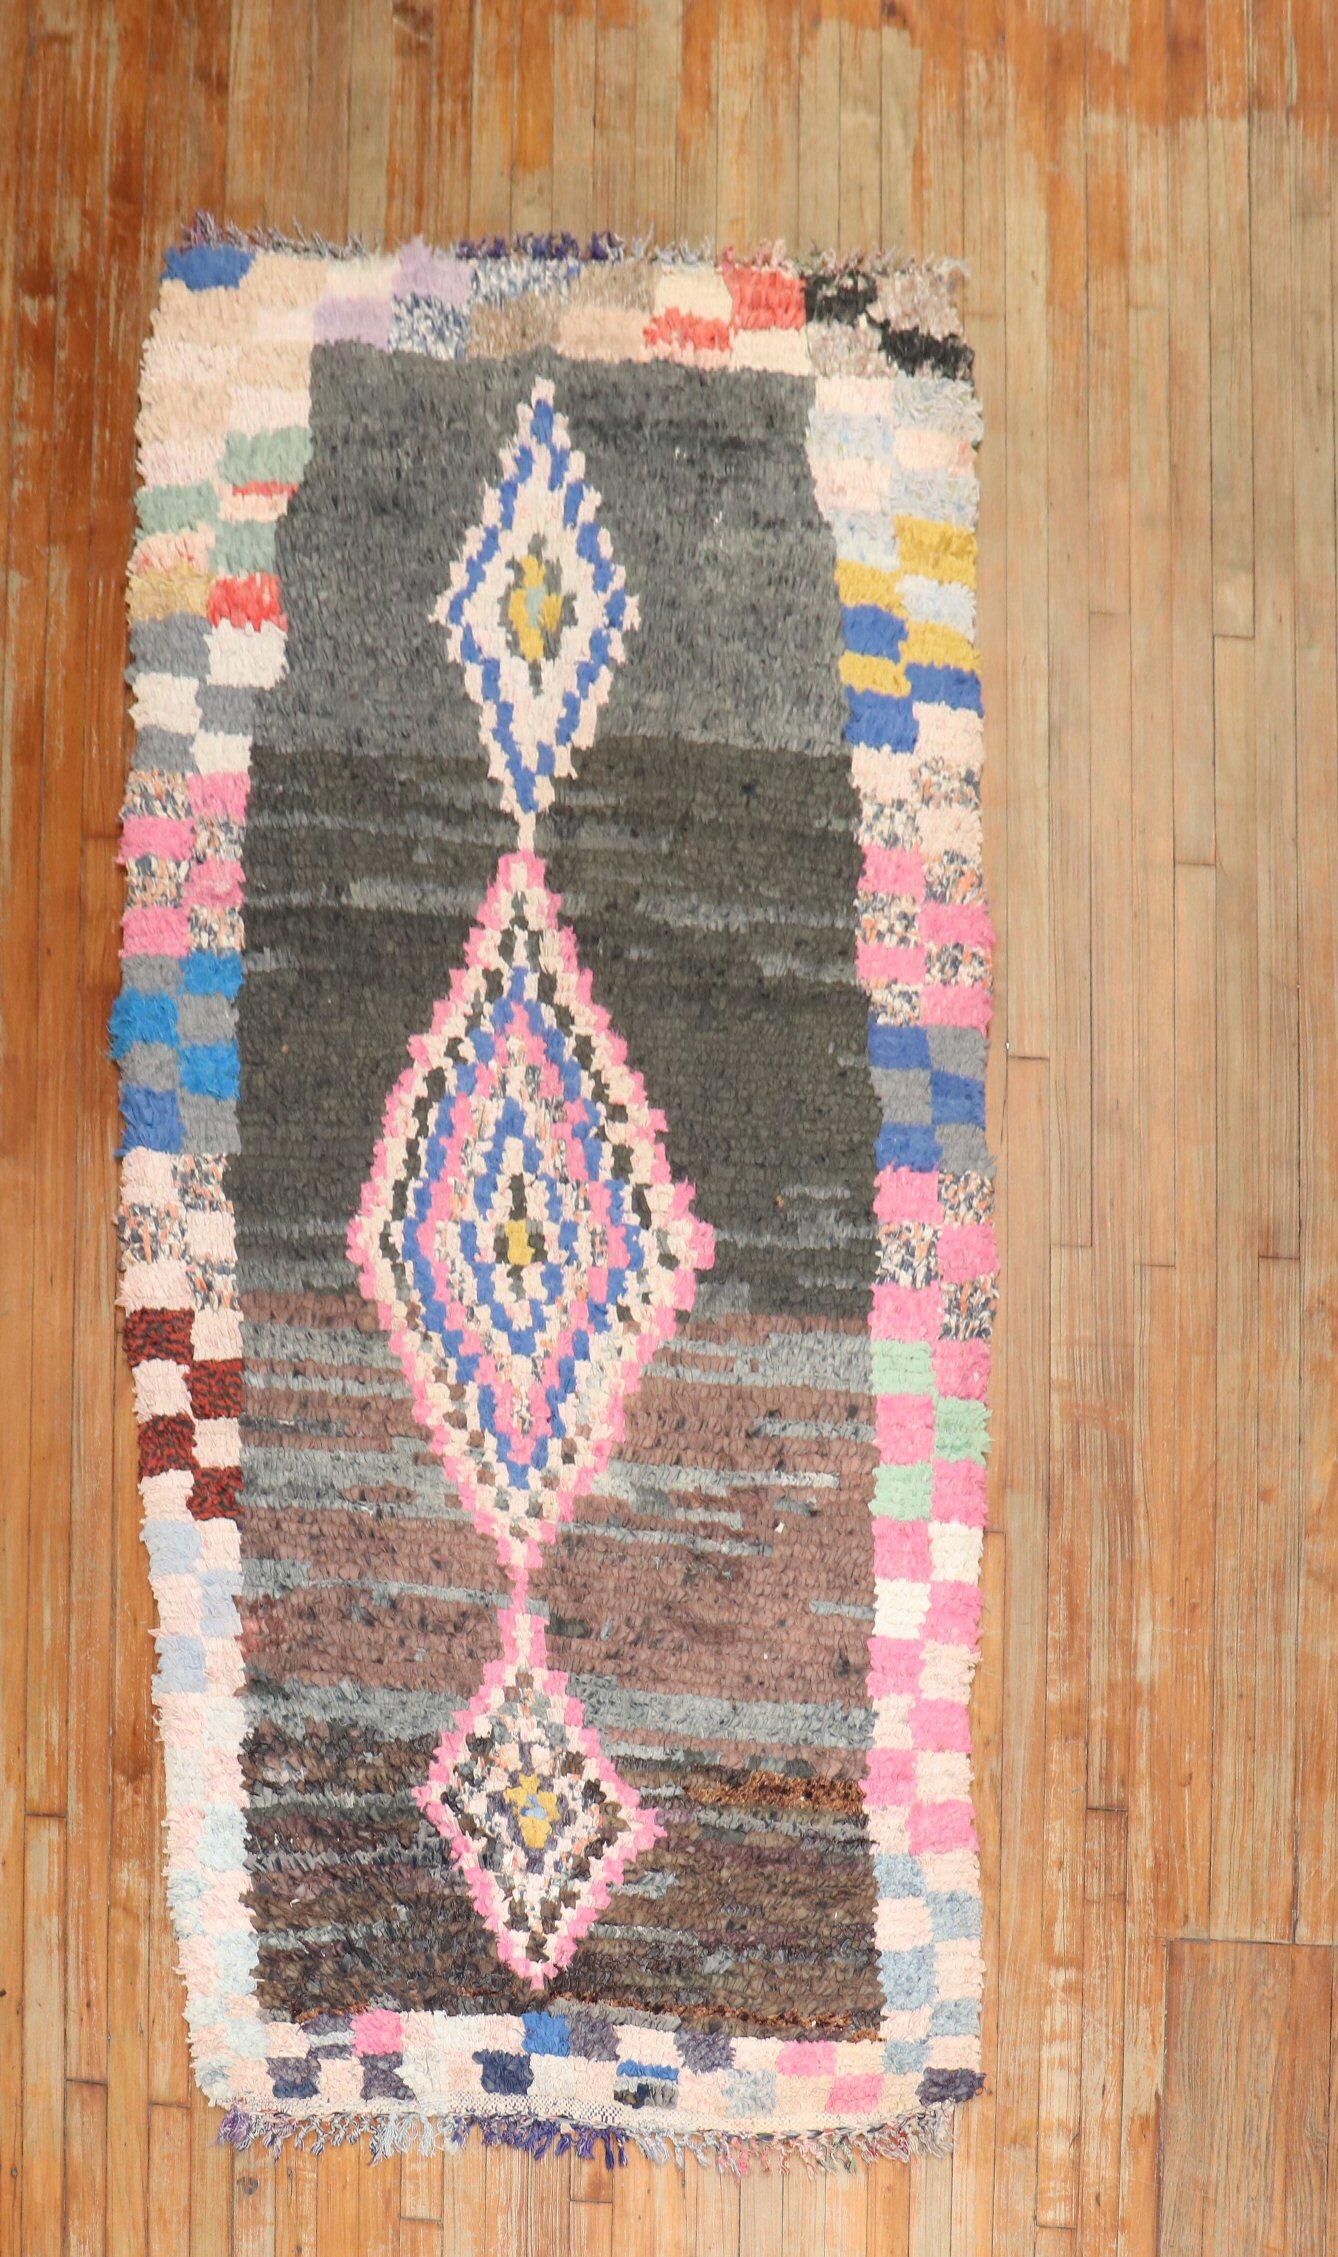 Mid-20th century Moroccan tribal rug

Measures: 3'10'' x 8'.